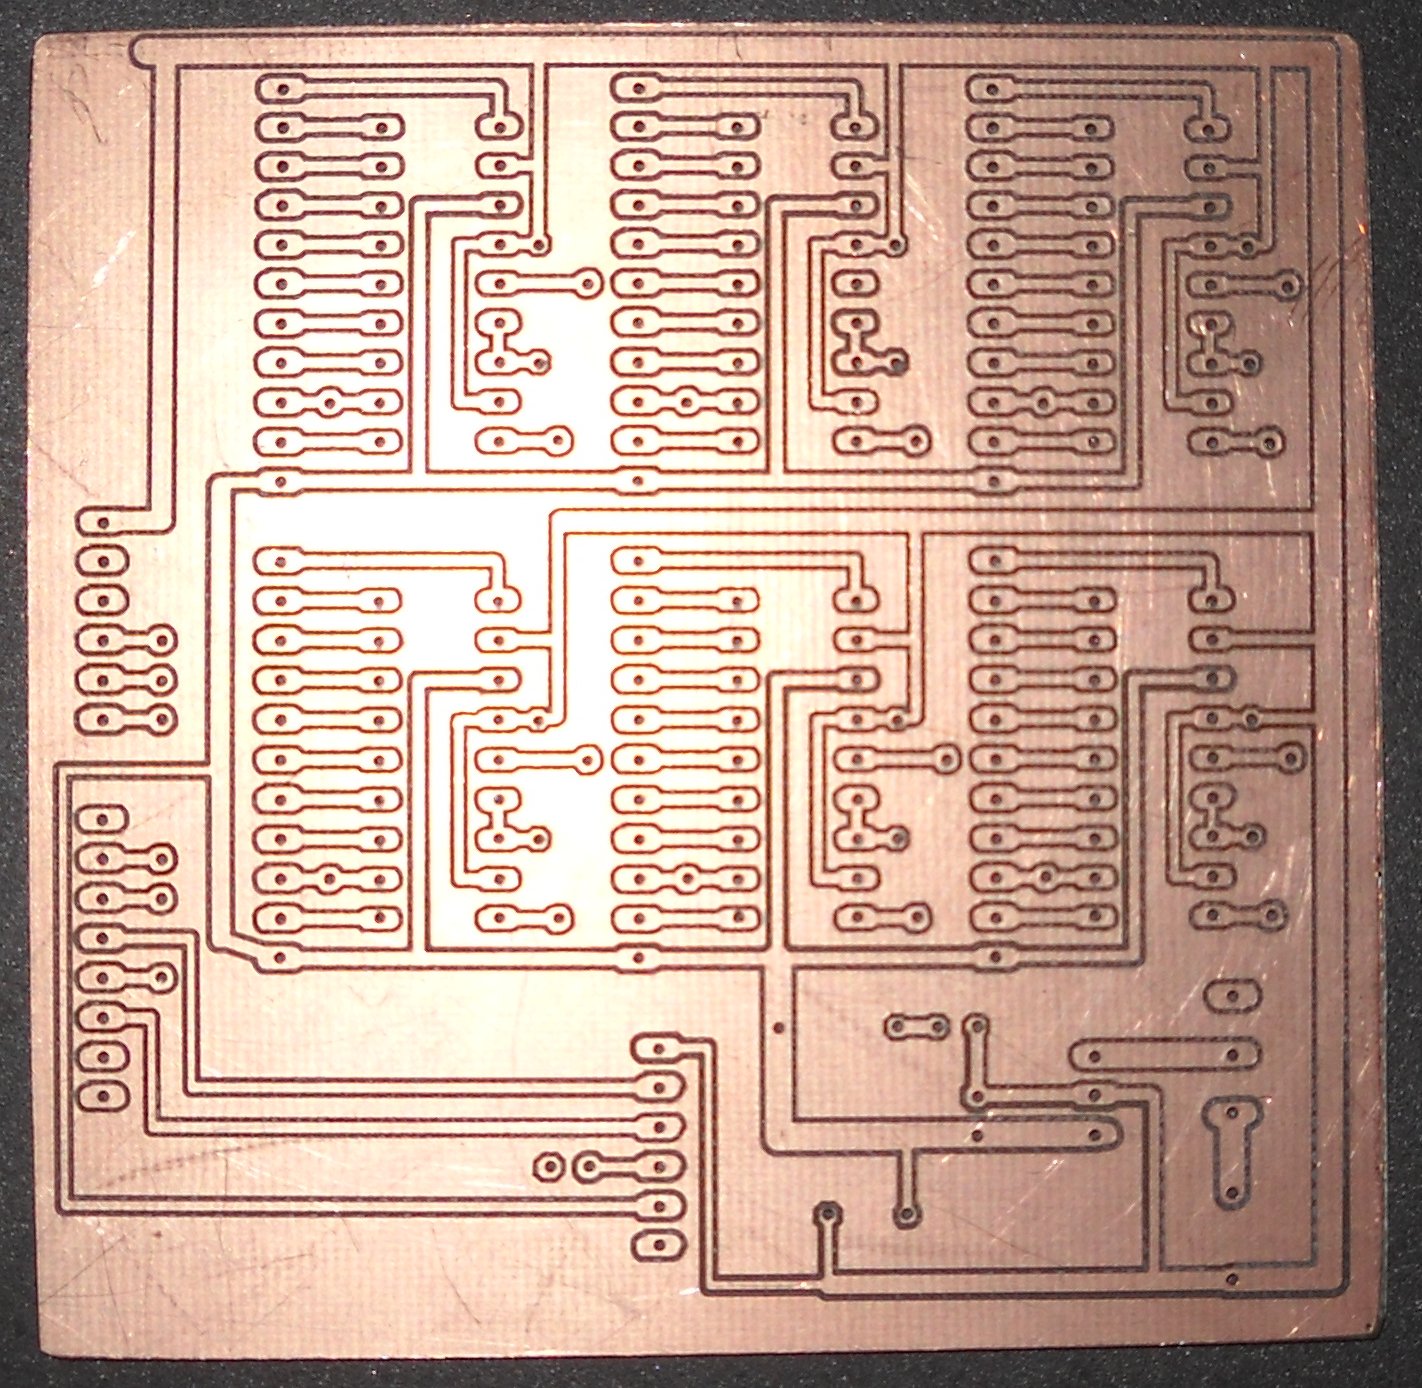 Light Show circuit board.jpg